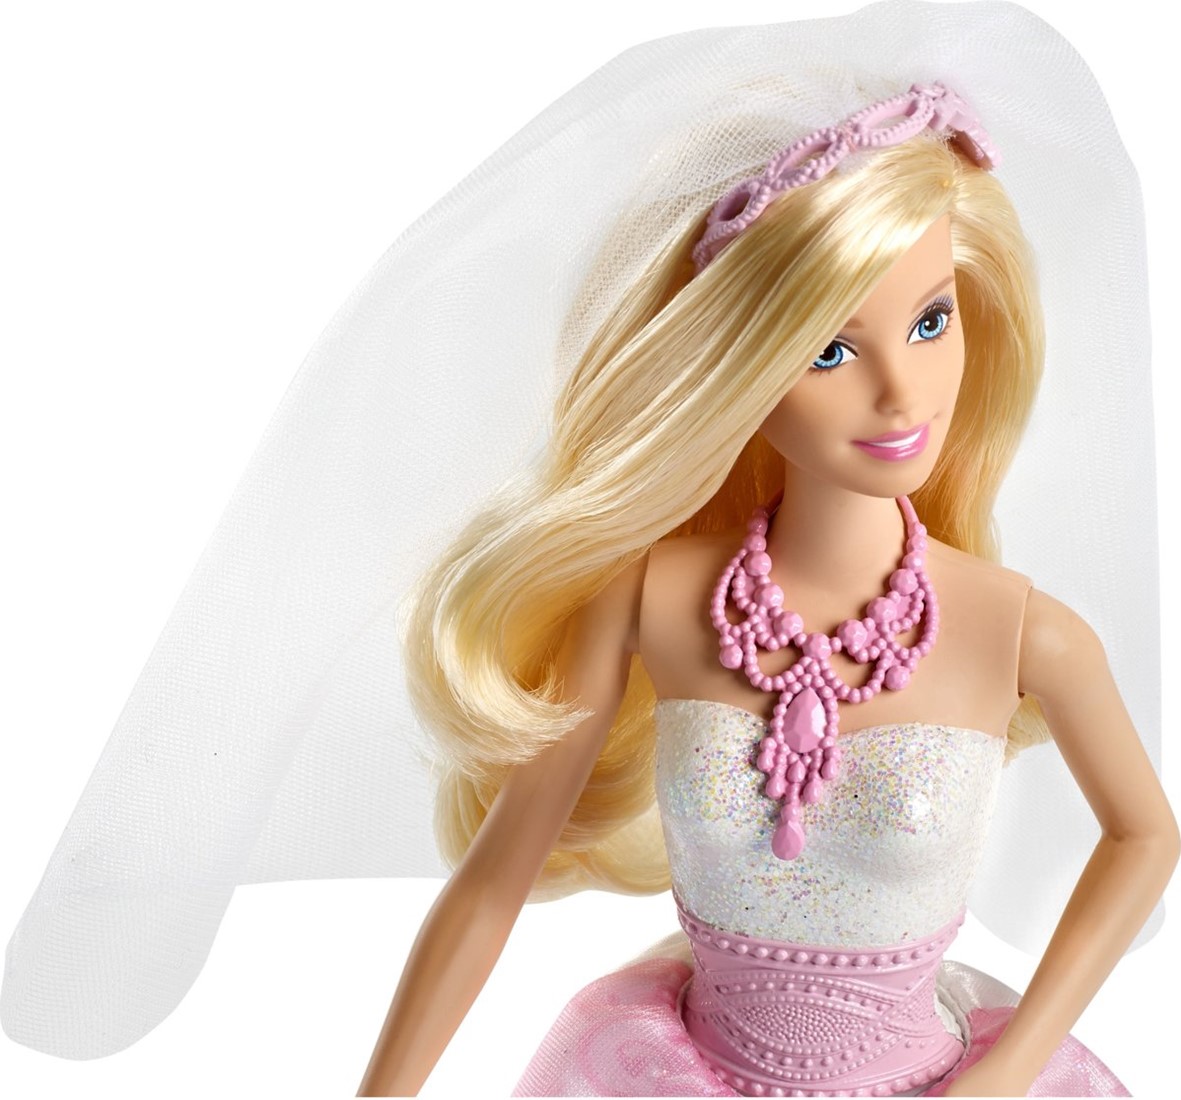 korting Kracht Lach Barbie bruid CFF 37 bij Planet Happy